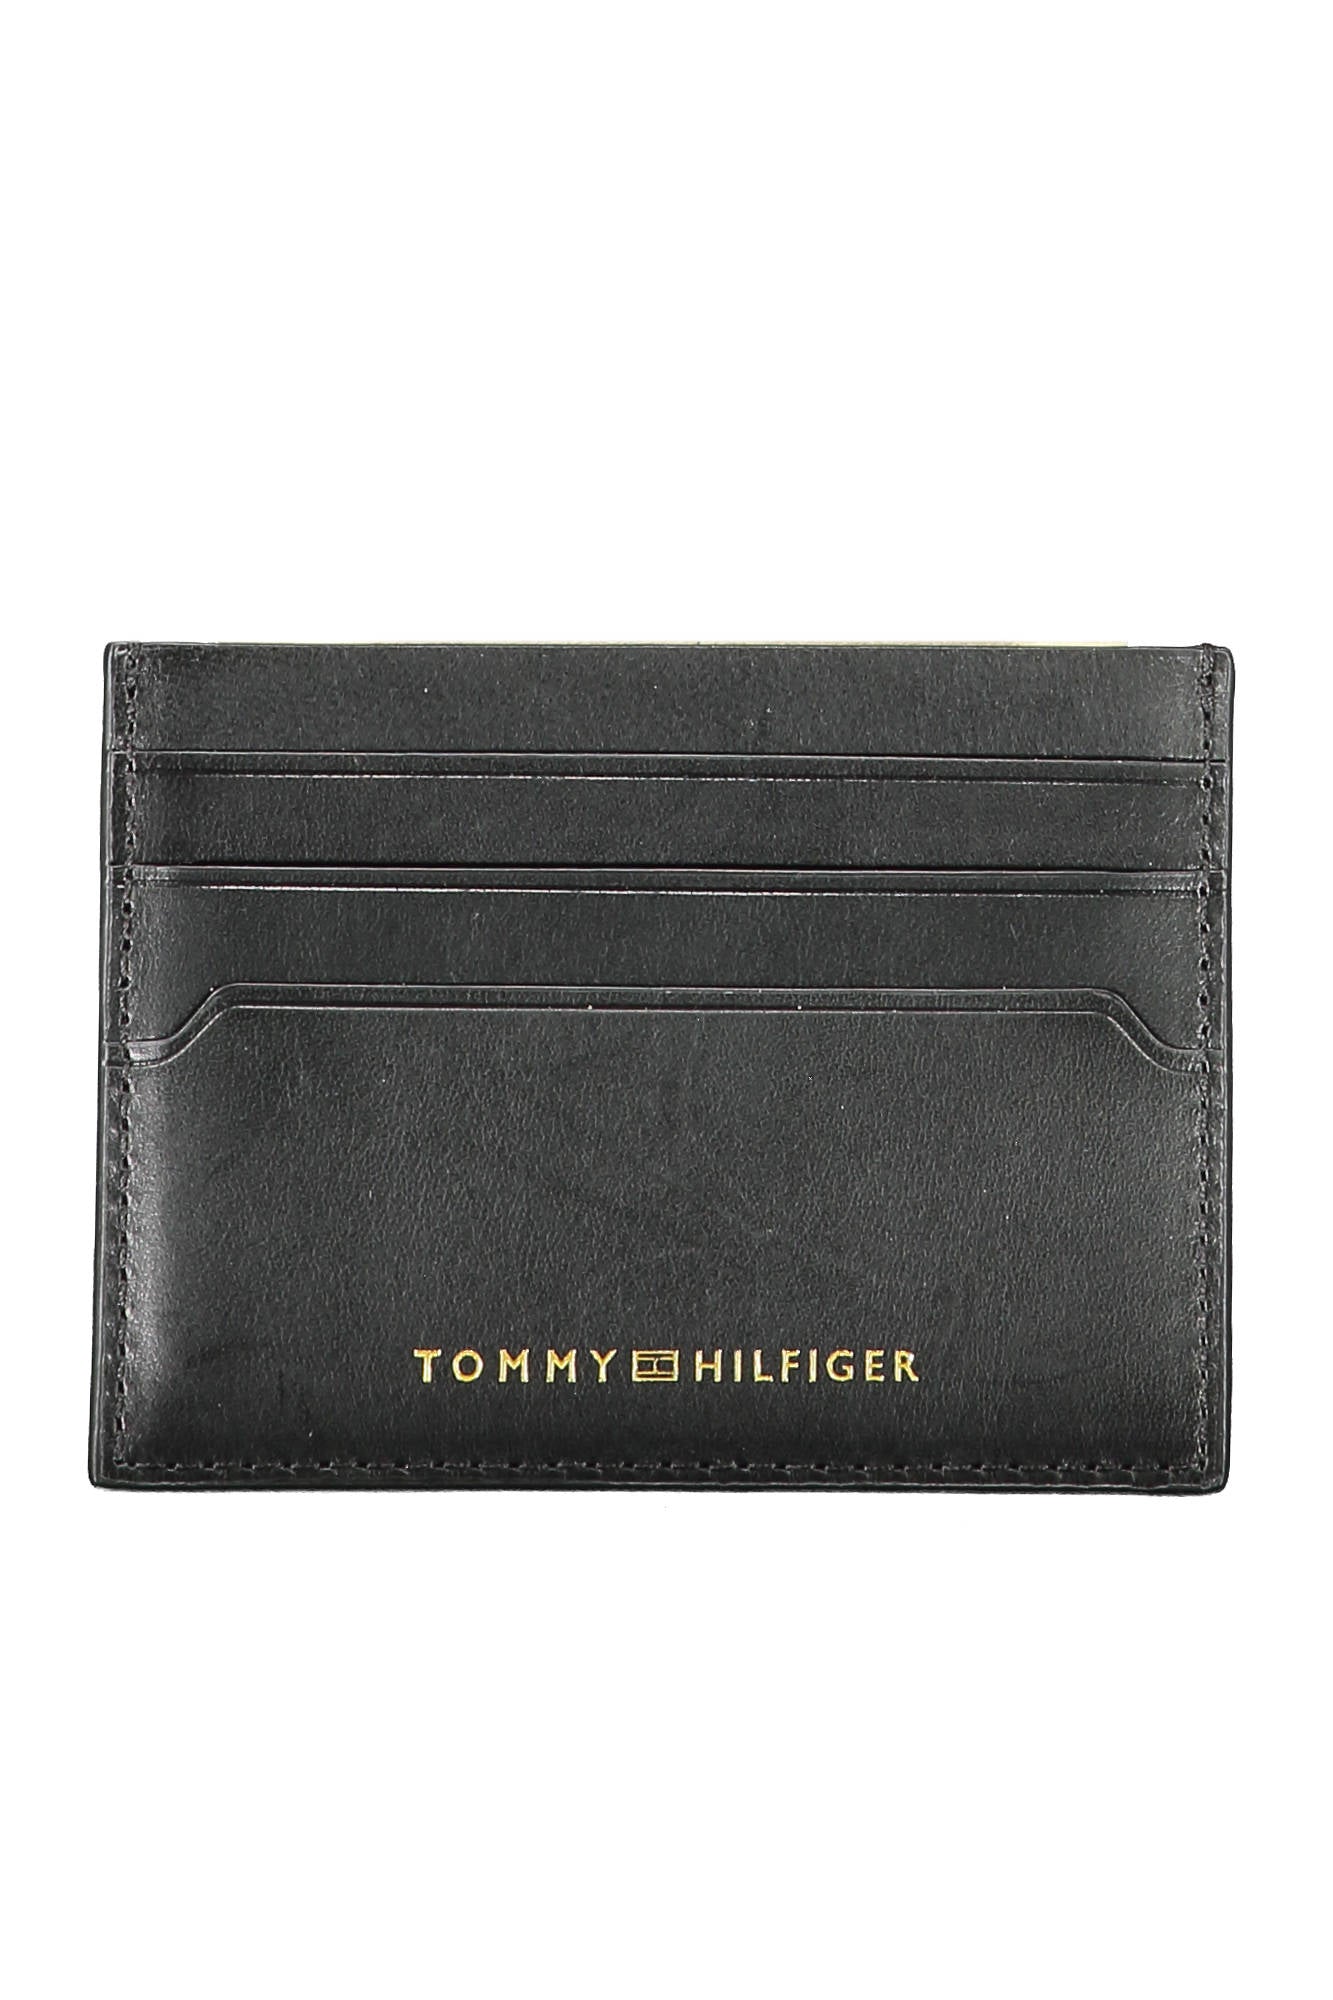 Tommy Hilfiger Black Leather Wallet - Fizigo